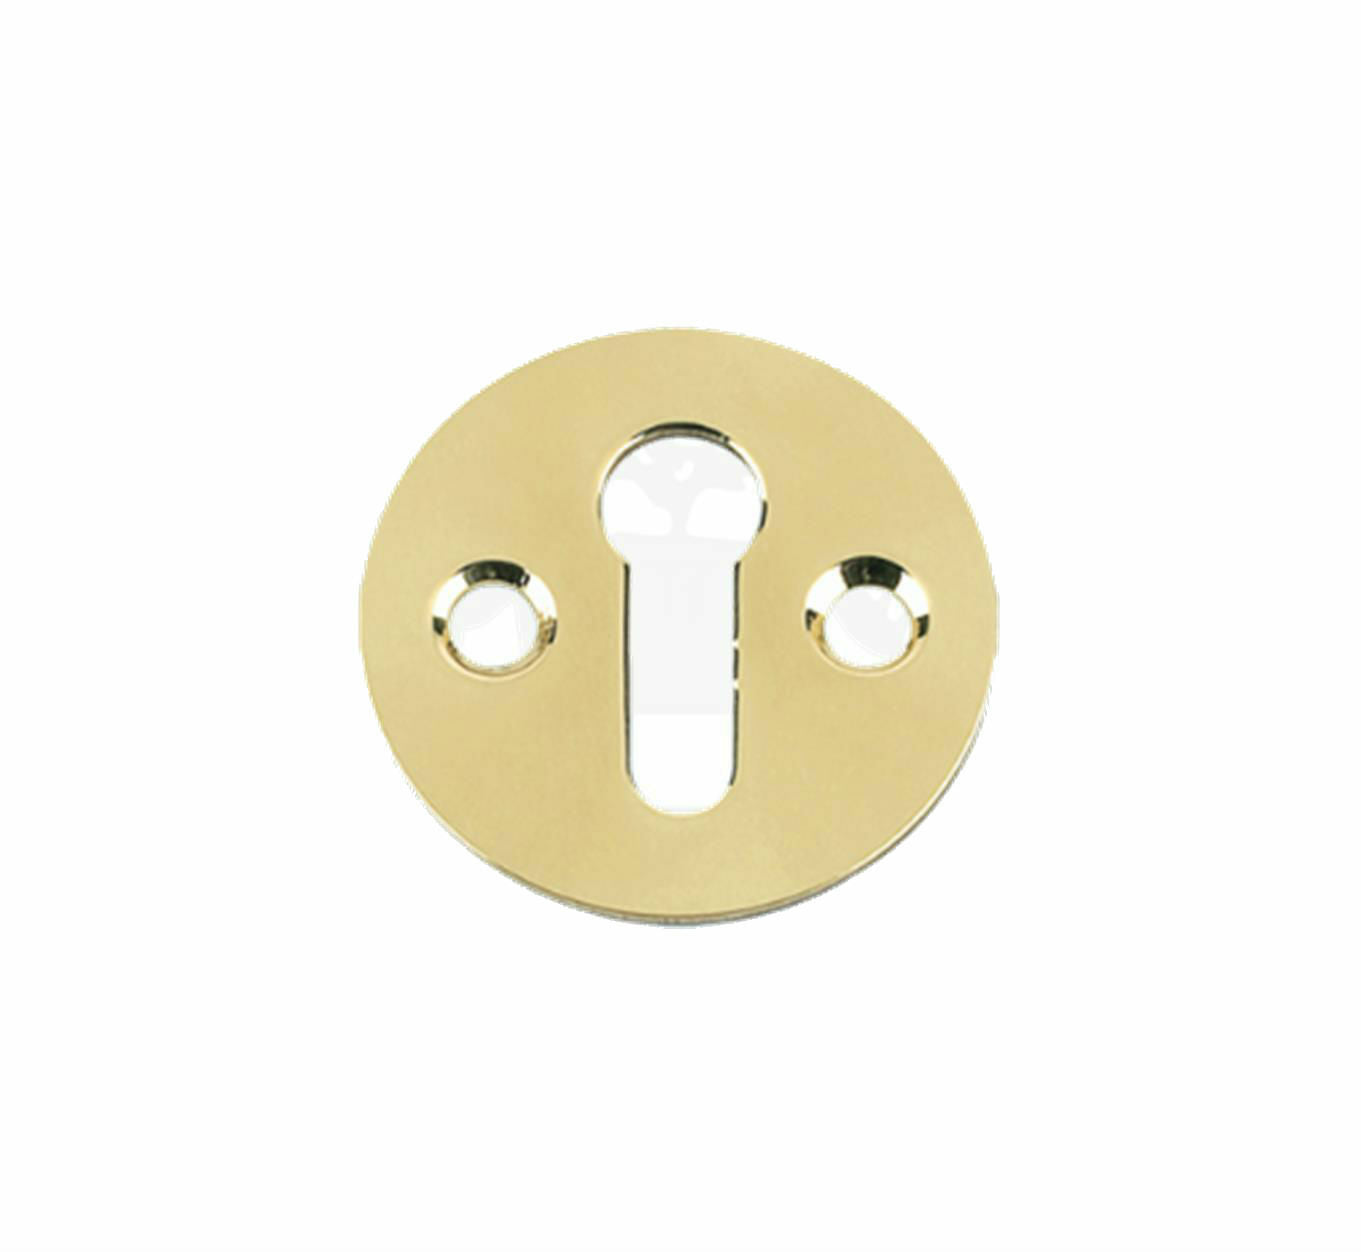 Flat Victorian Key Hole Escutcheon Lock Door Cover Standard Profile 32mm Dia